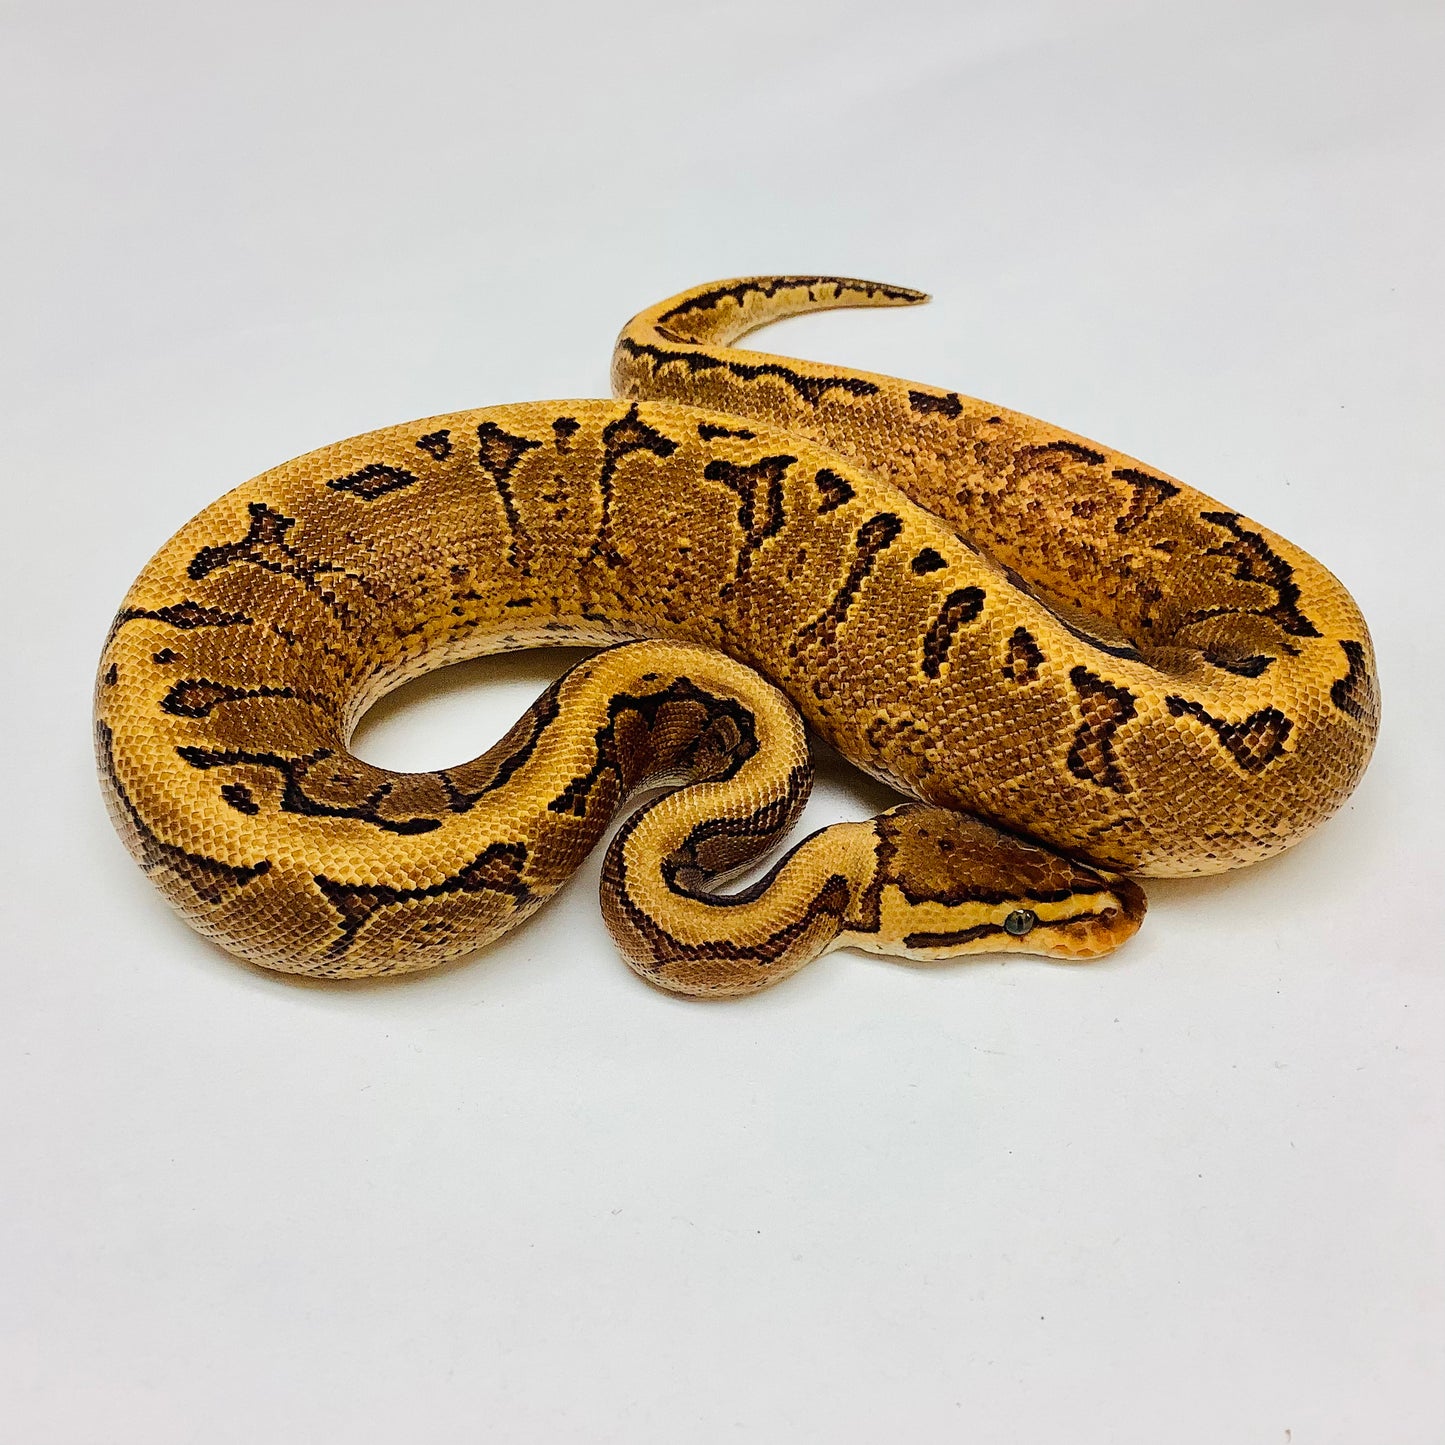 Calico Pinstripe Yellowbelly Ball Python- Male #2022M01